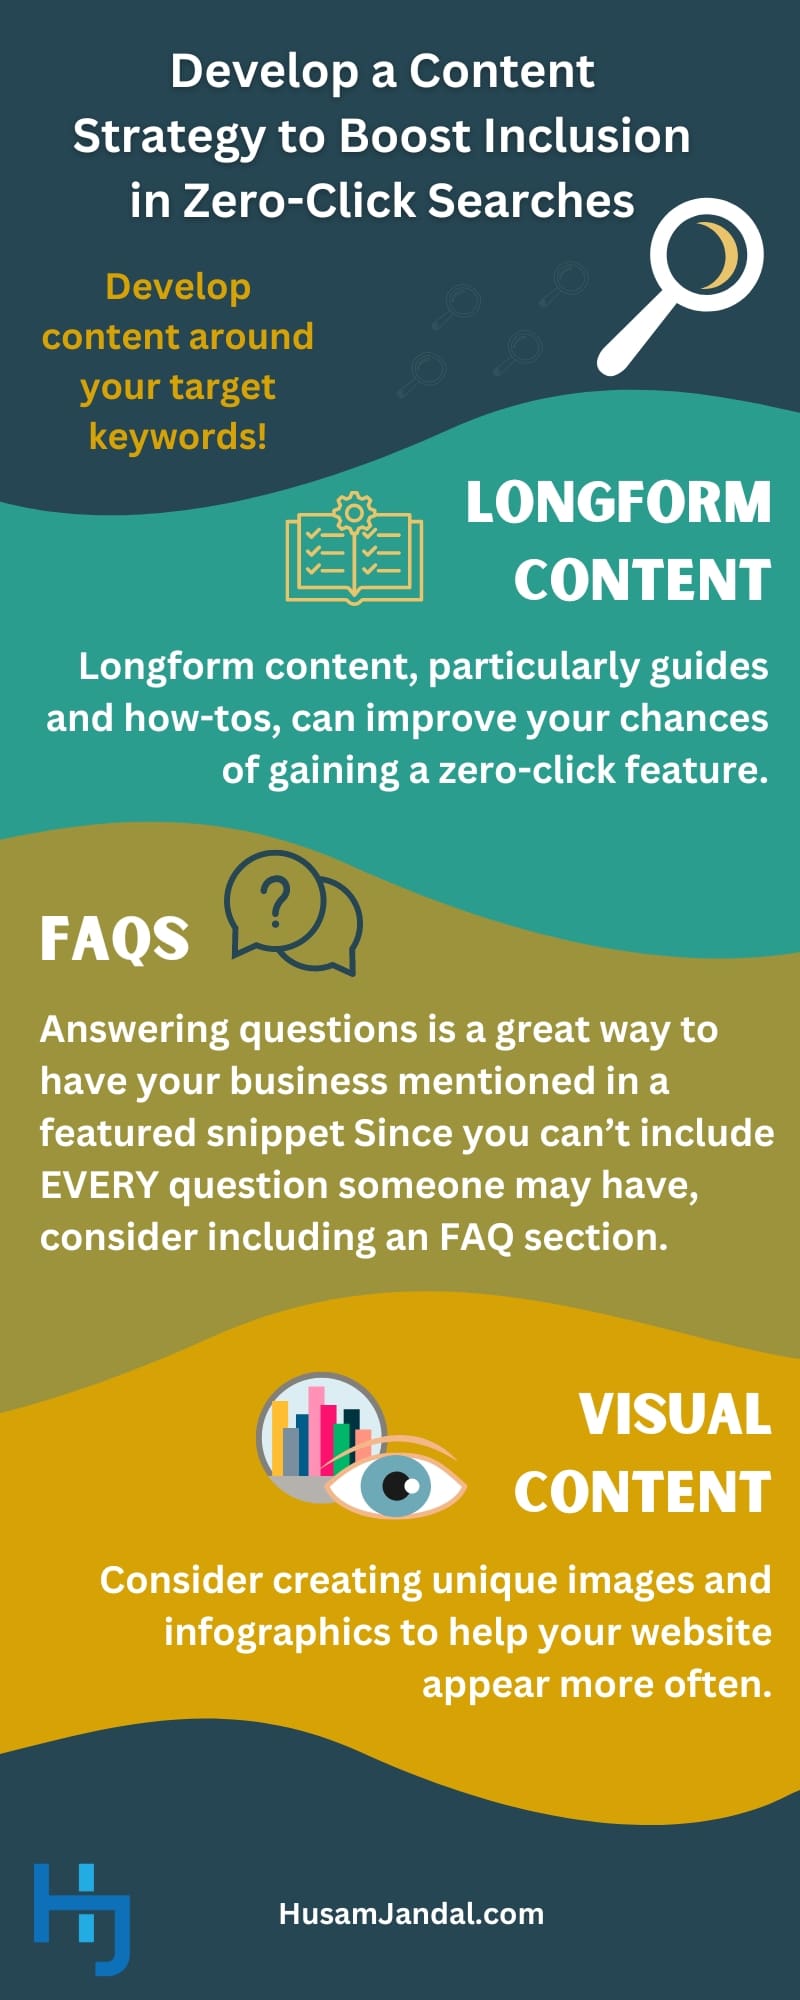 Develop a Content Strategy to Boost Inclusion in Zero-Click Searches